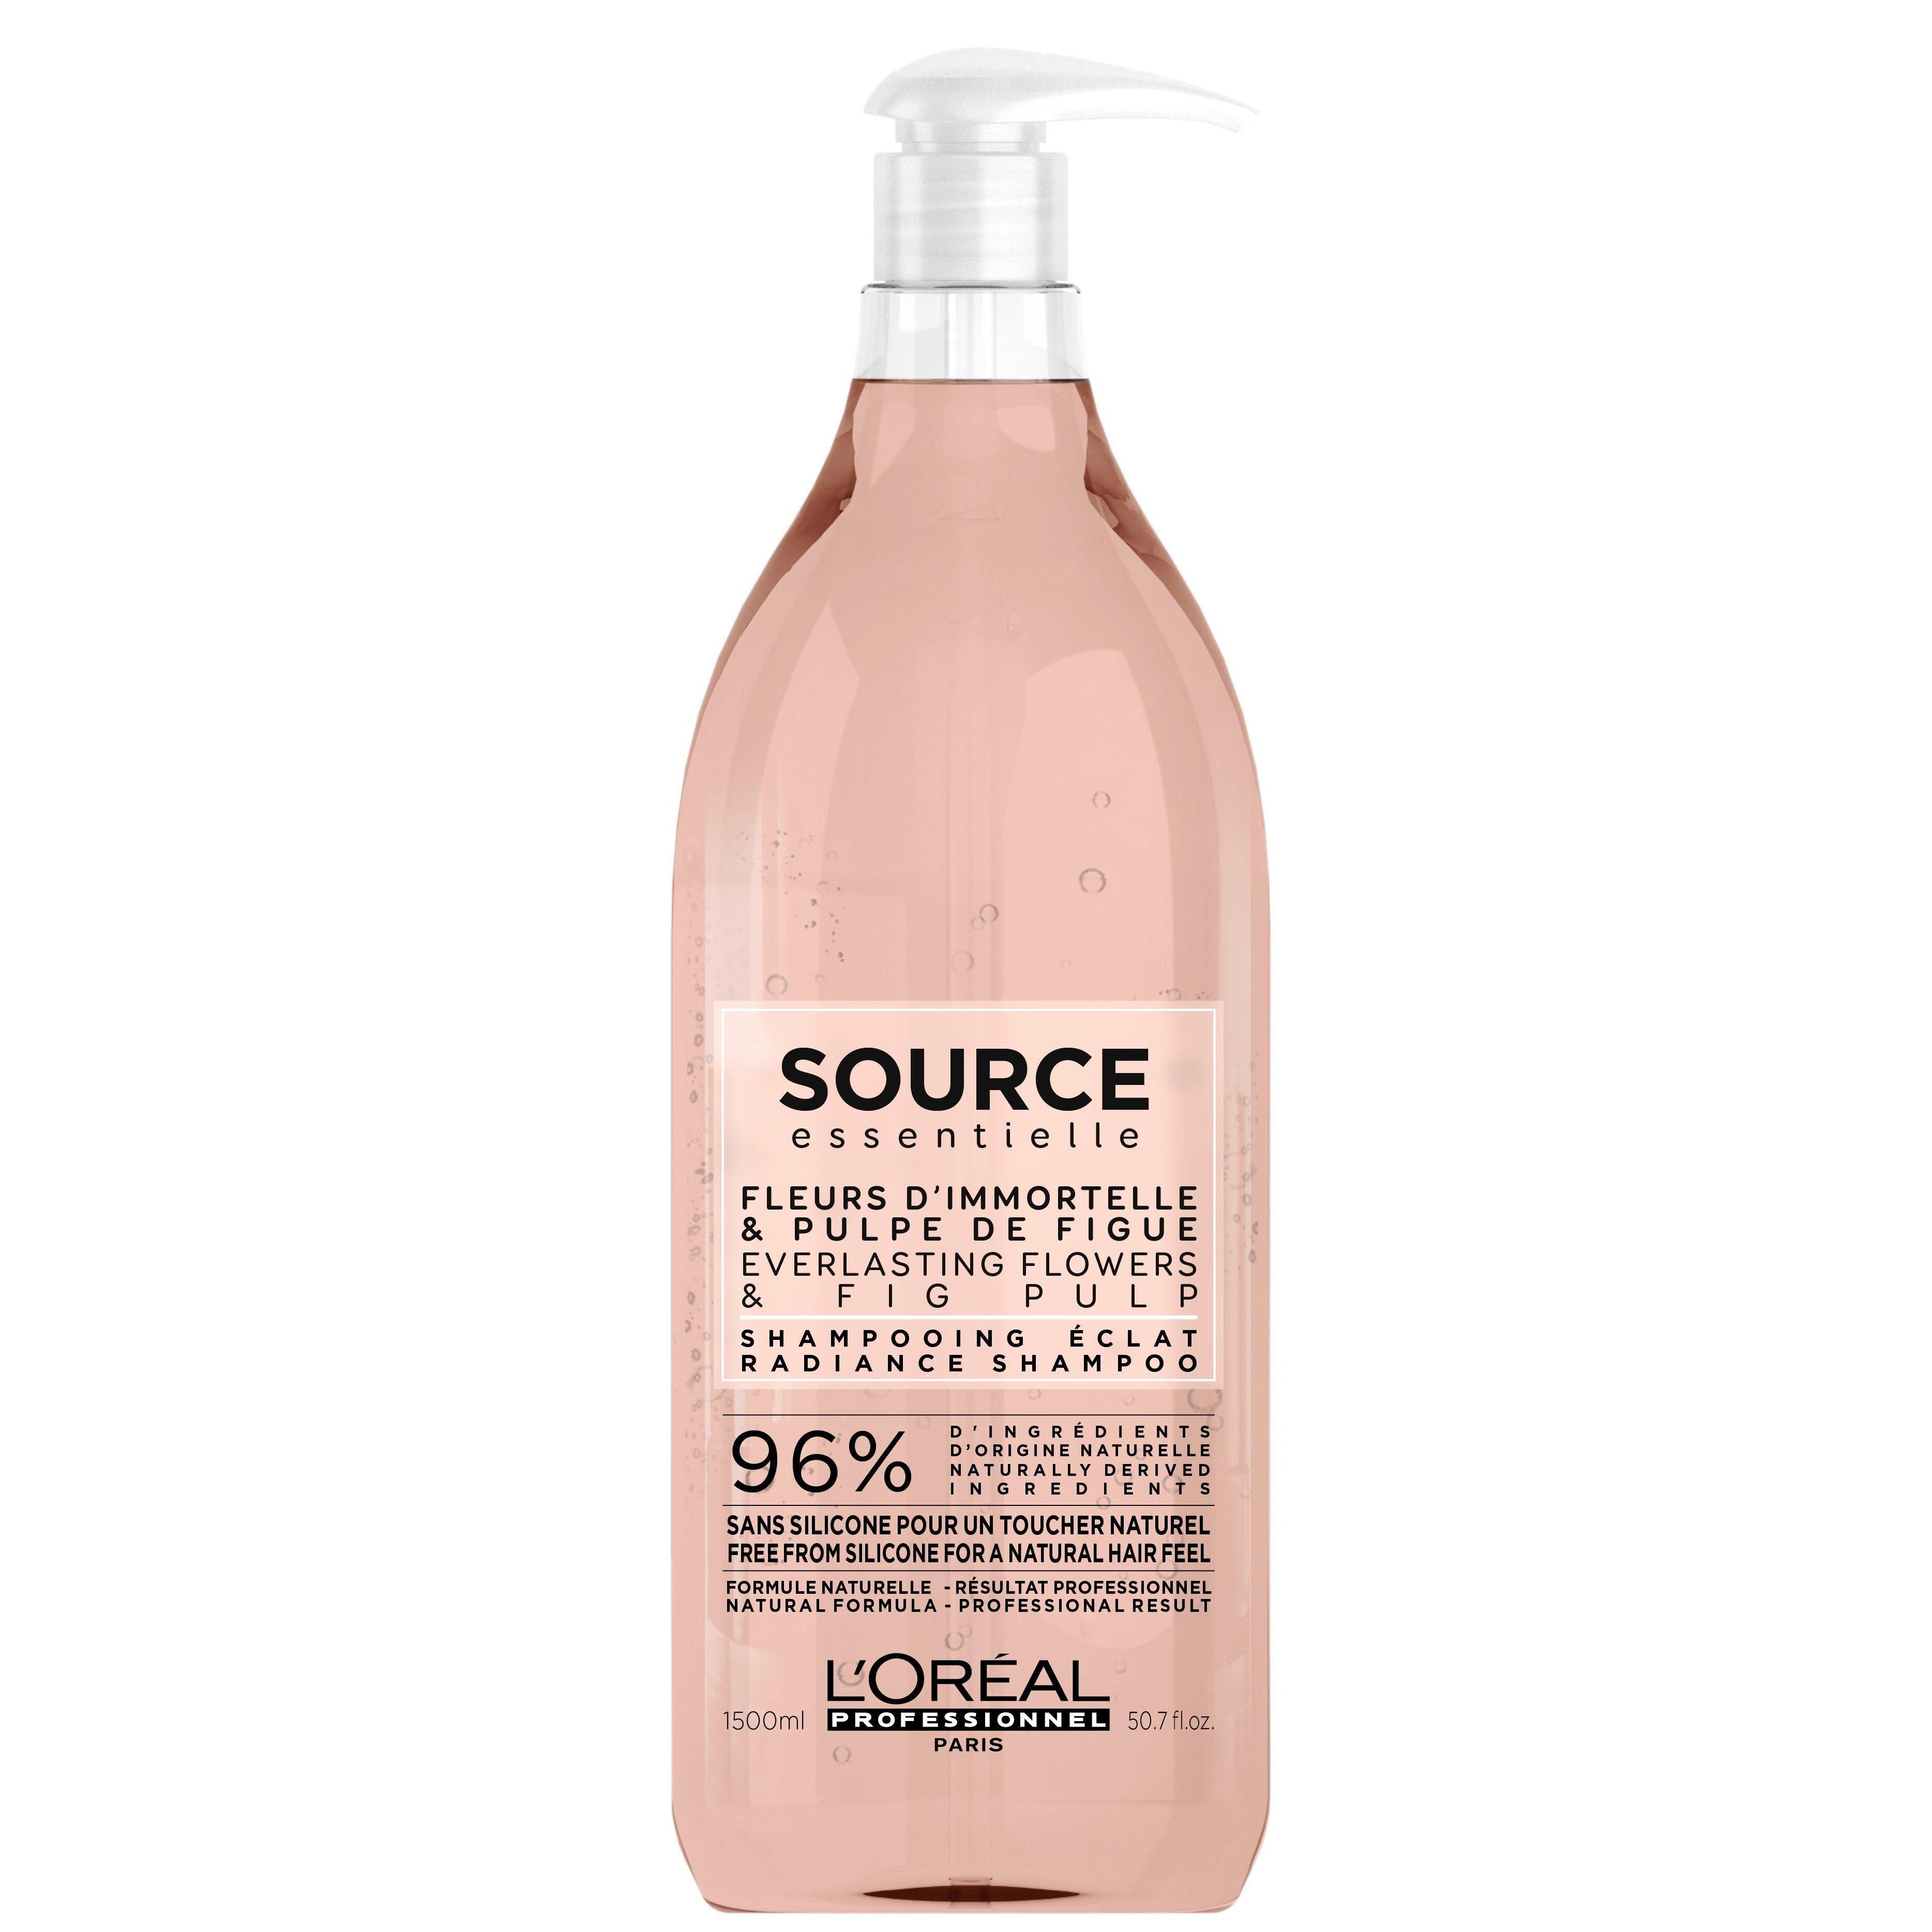 L'Oreal Source Essentielle Radiance Shampoo 1500ml